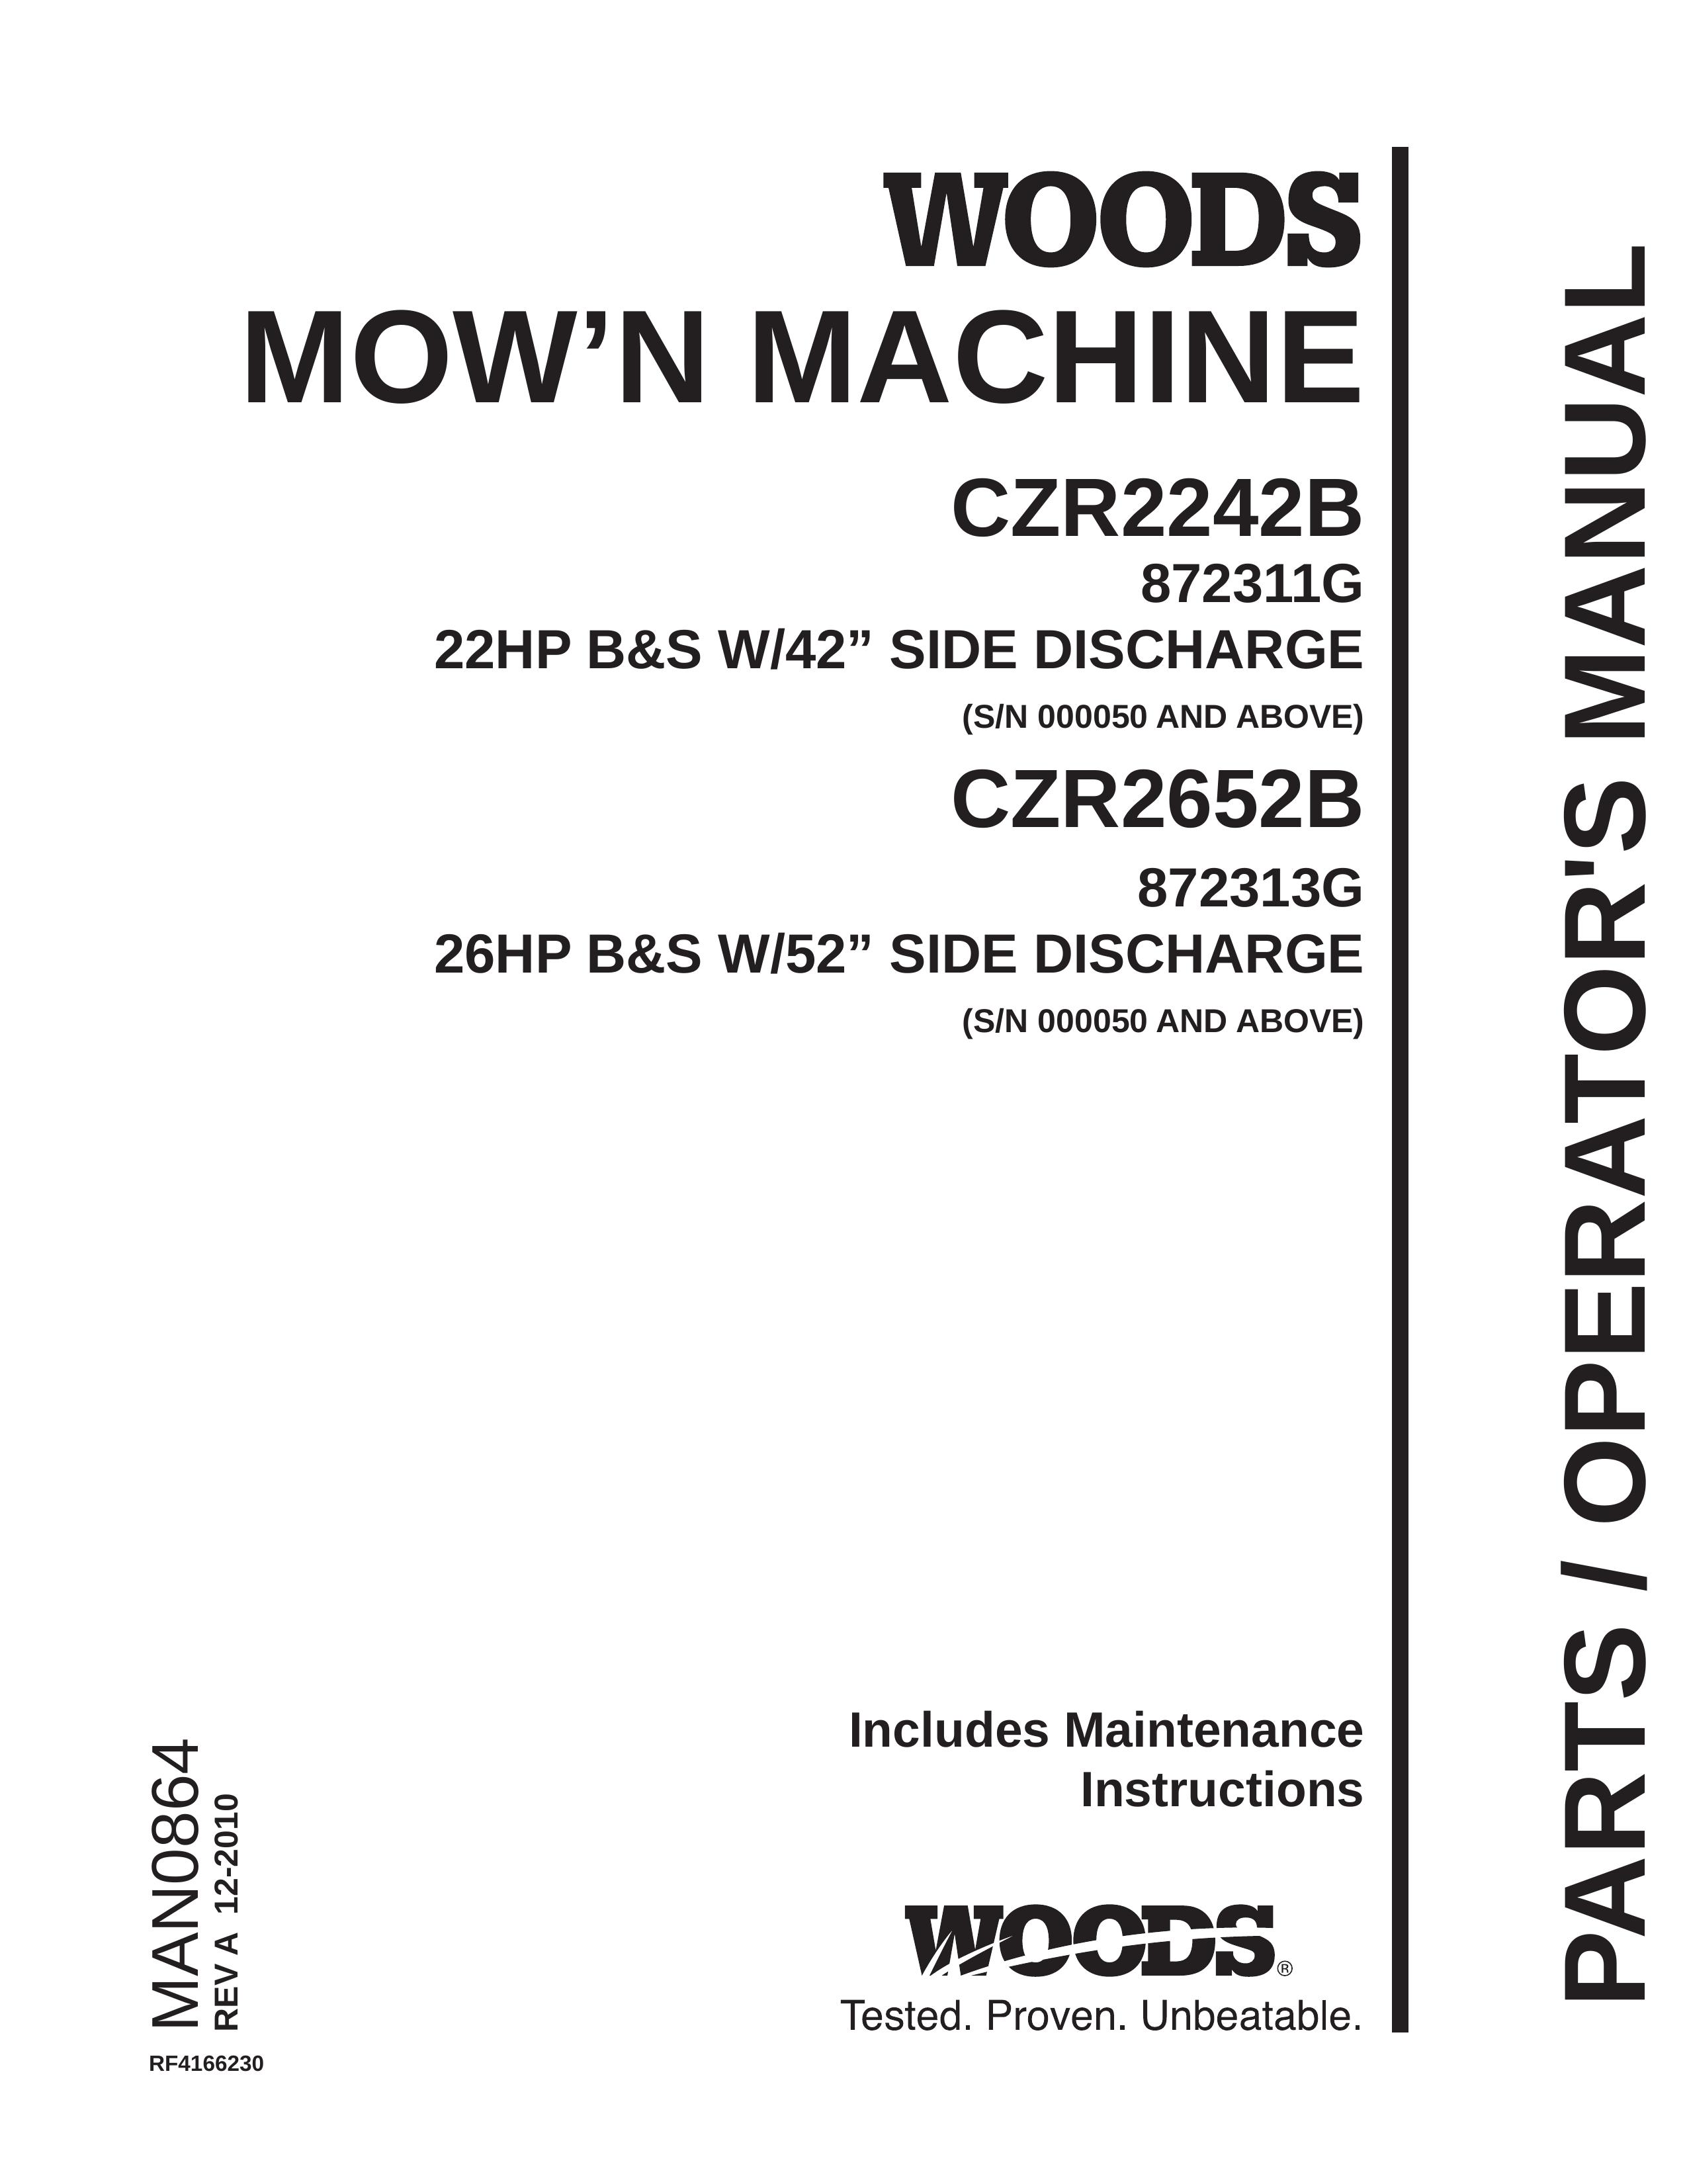 Woods Equipment CZR2652B Lawn Mower User Manual